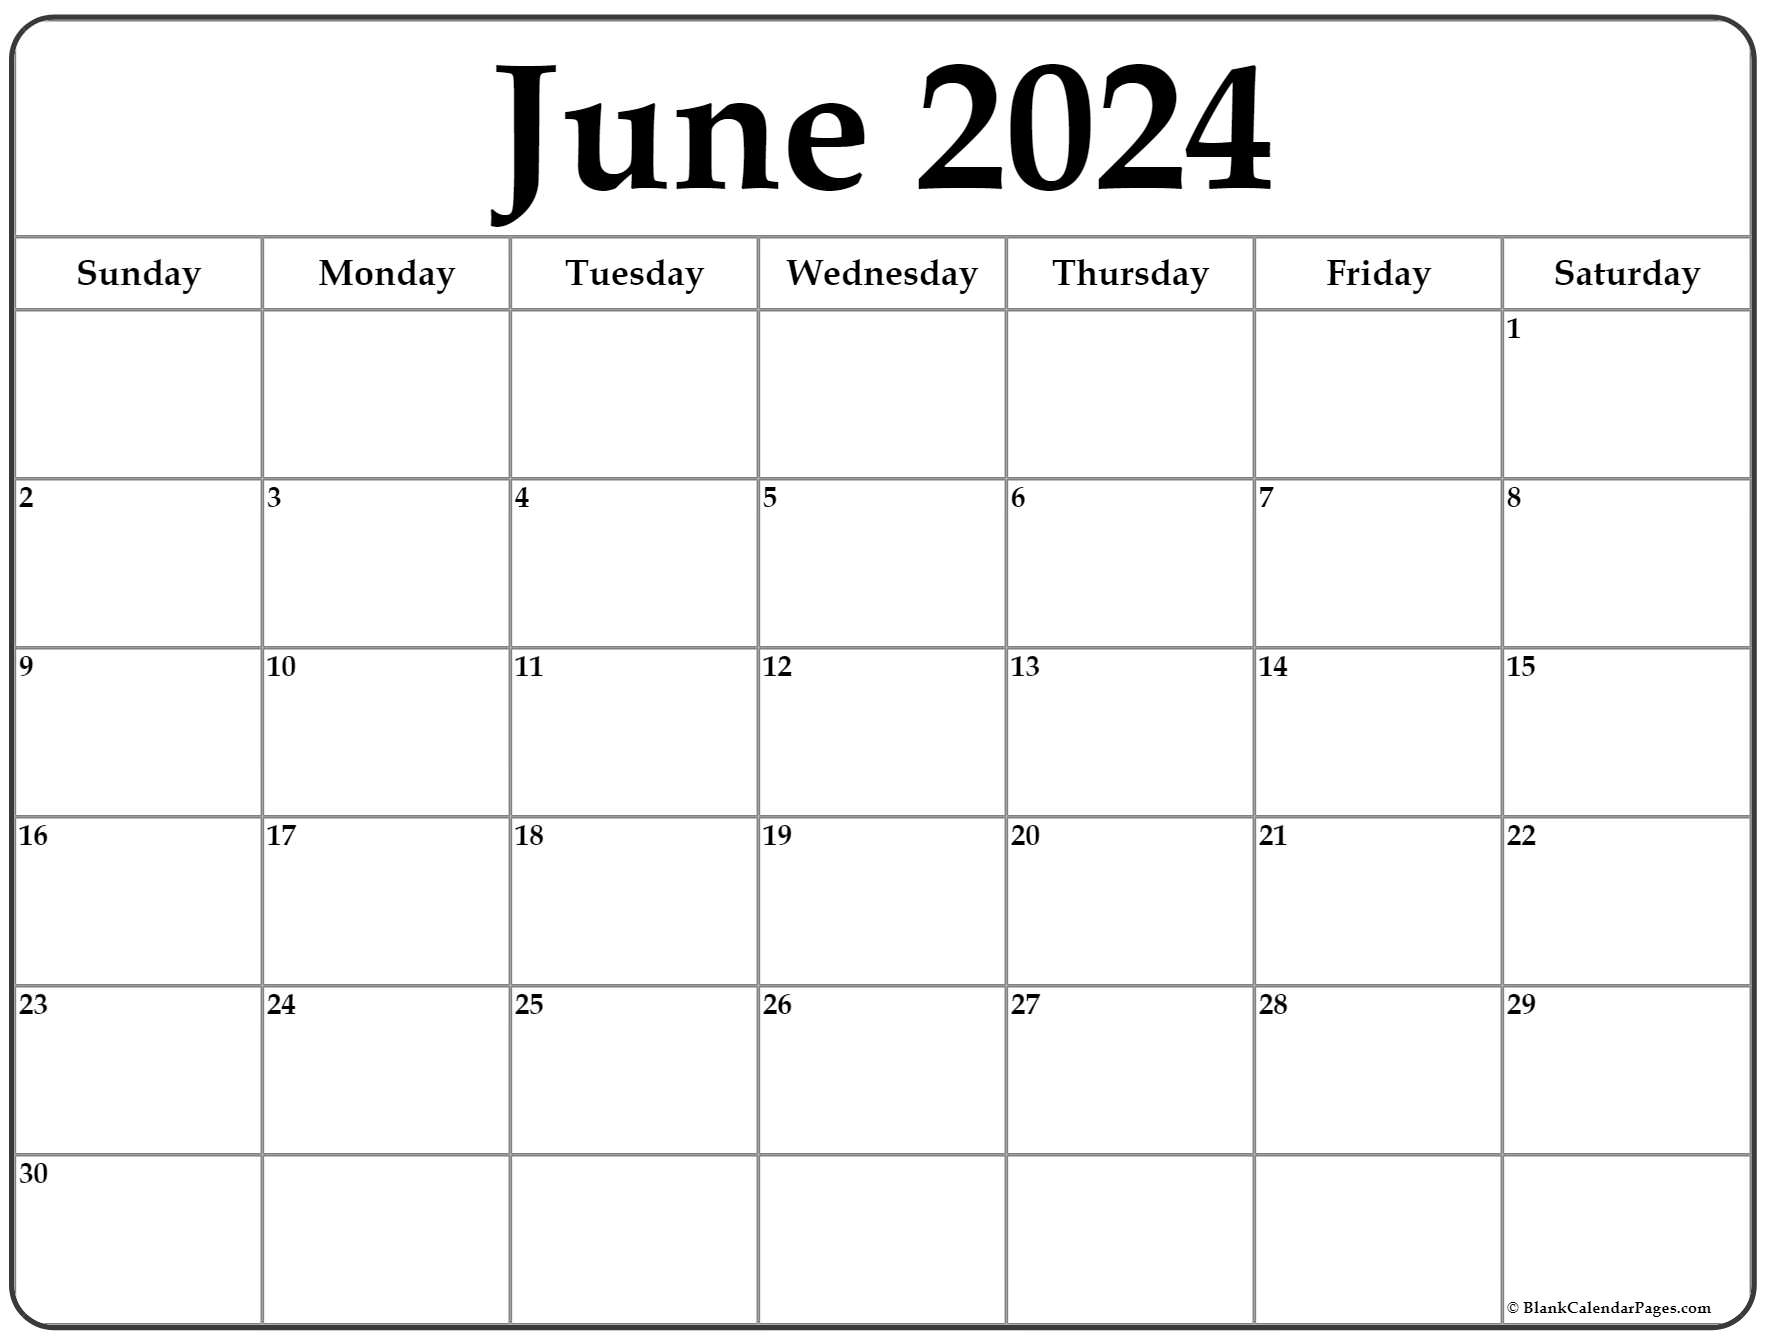 Monthly Calendar 2022 June June 2022 Calendar | Free Printable Calendar Templates